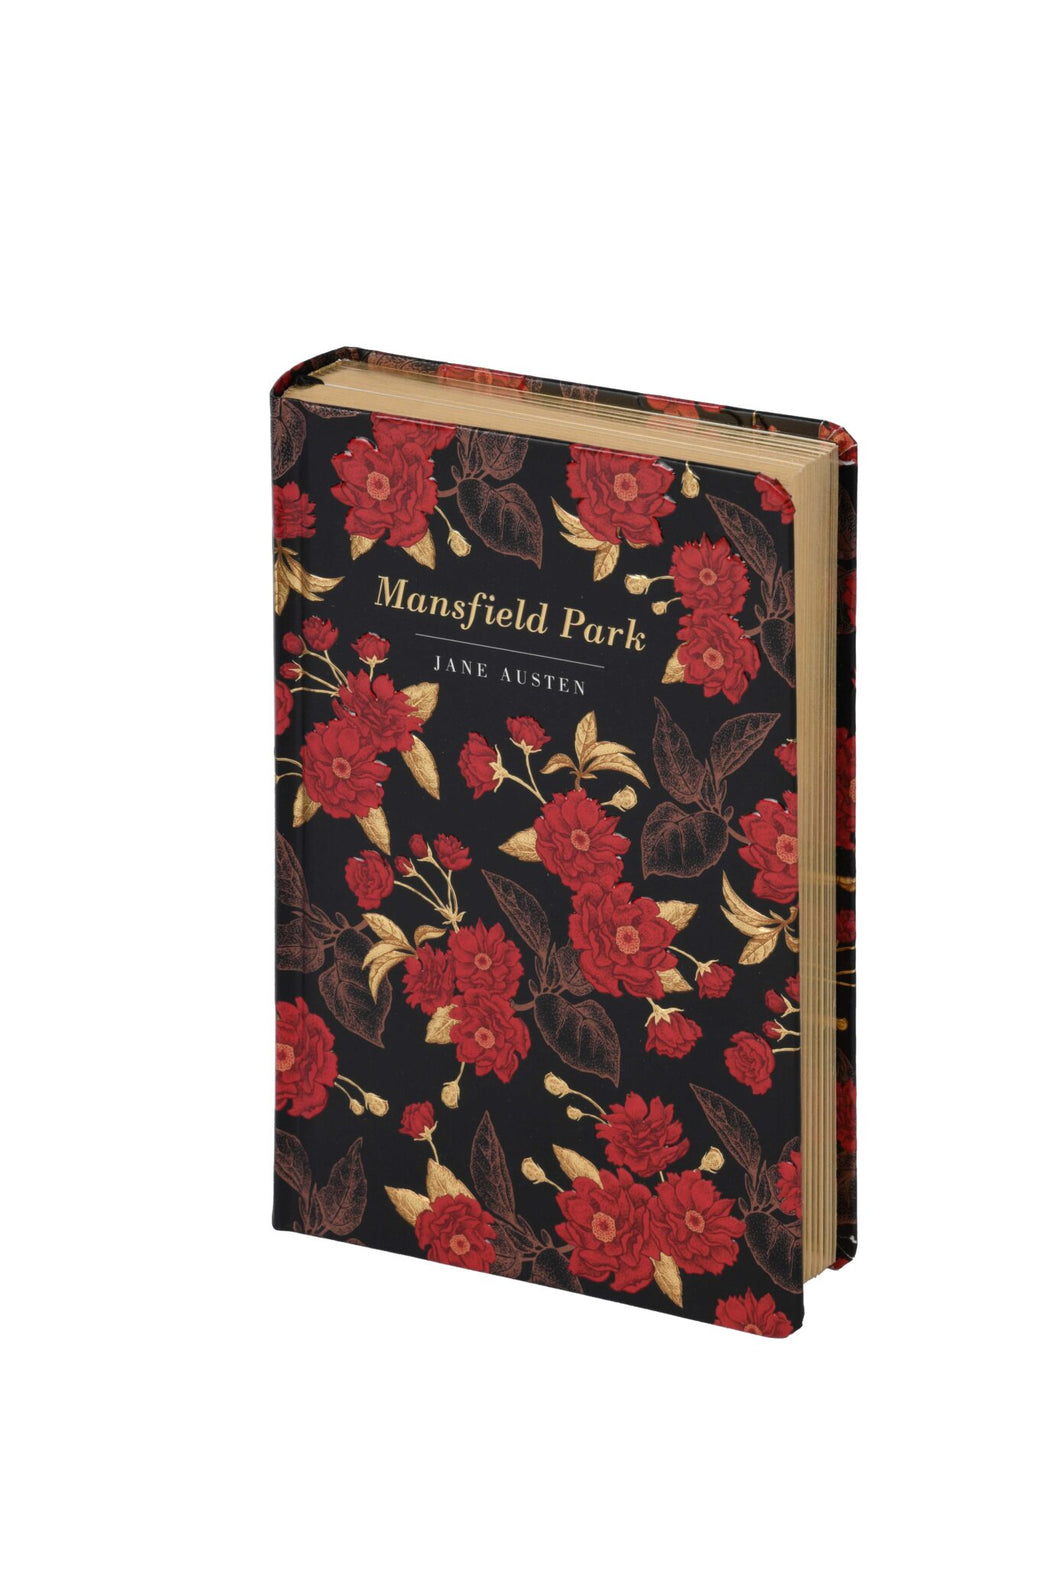 Mansfield Park, Jane Austen (Chiltern Classics)